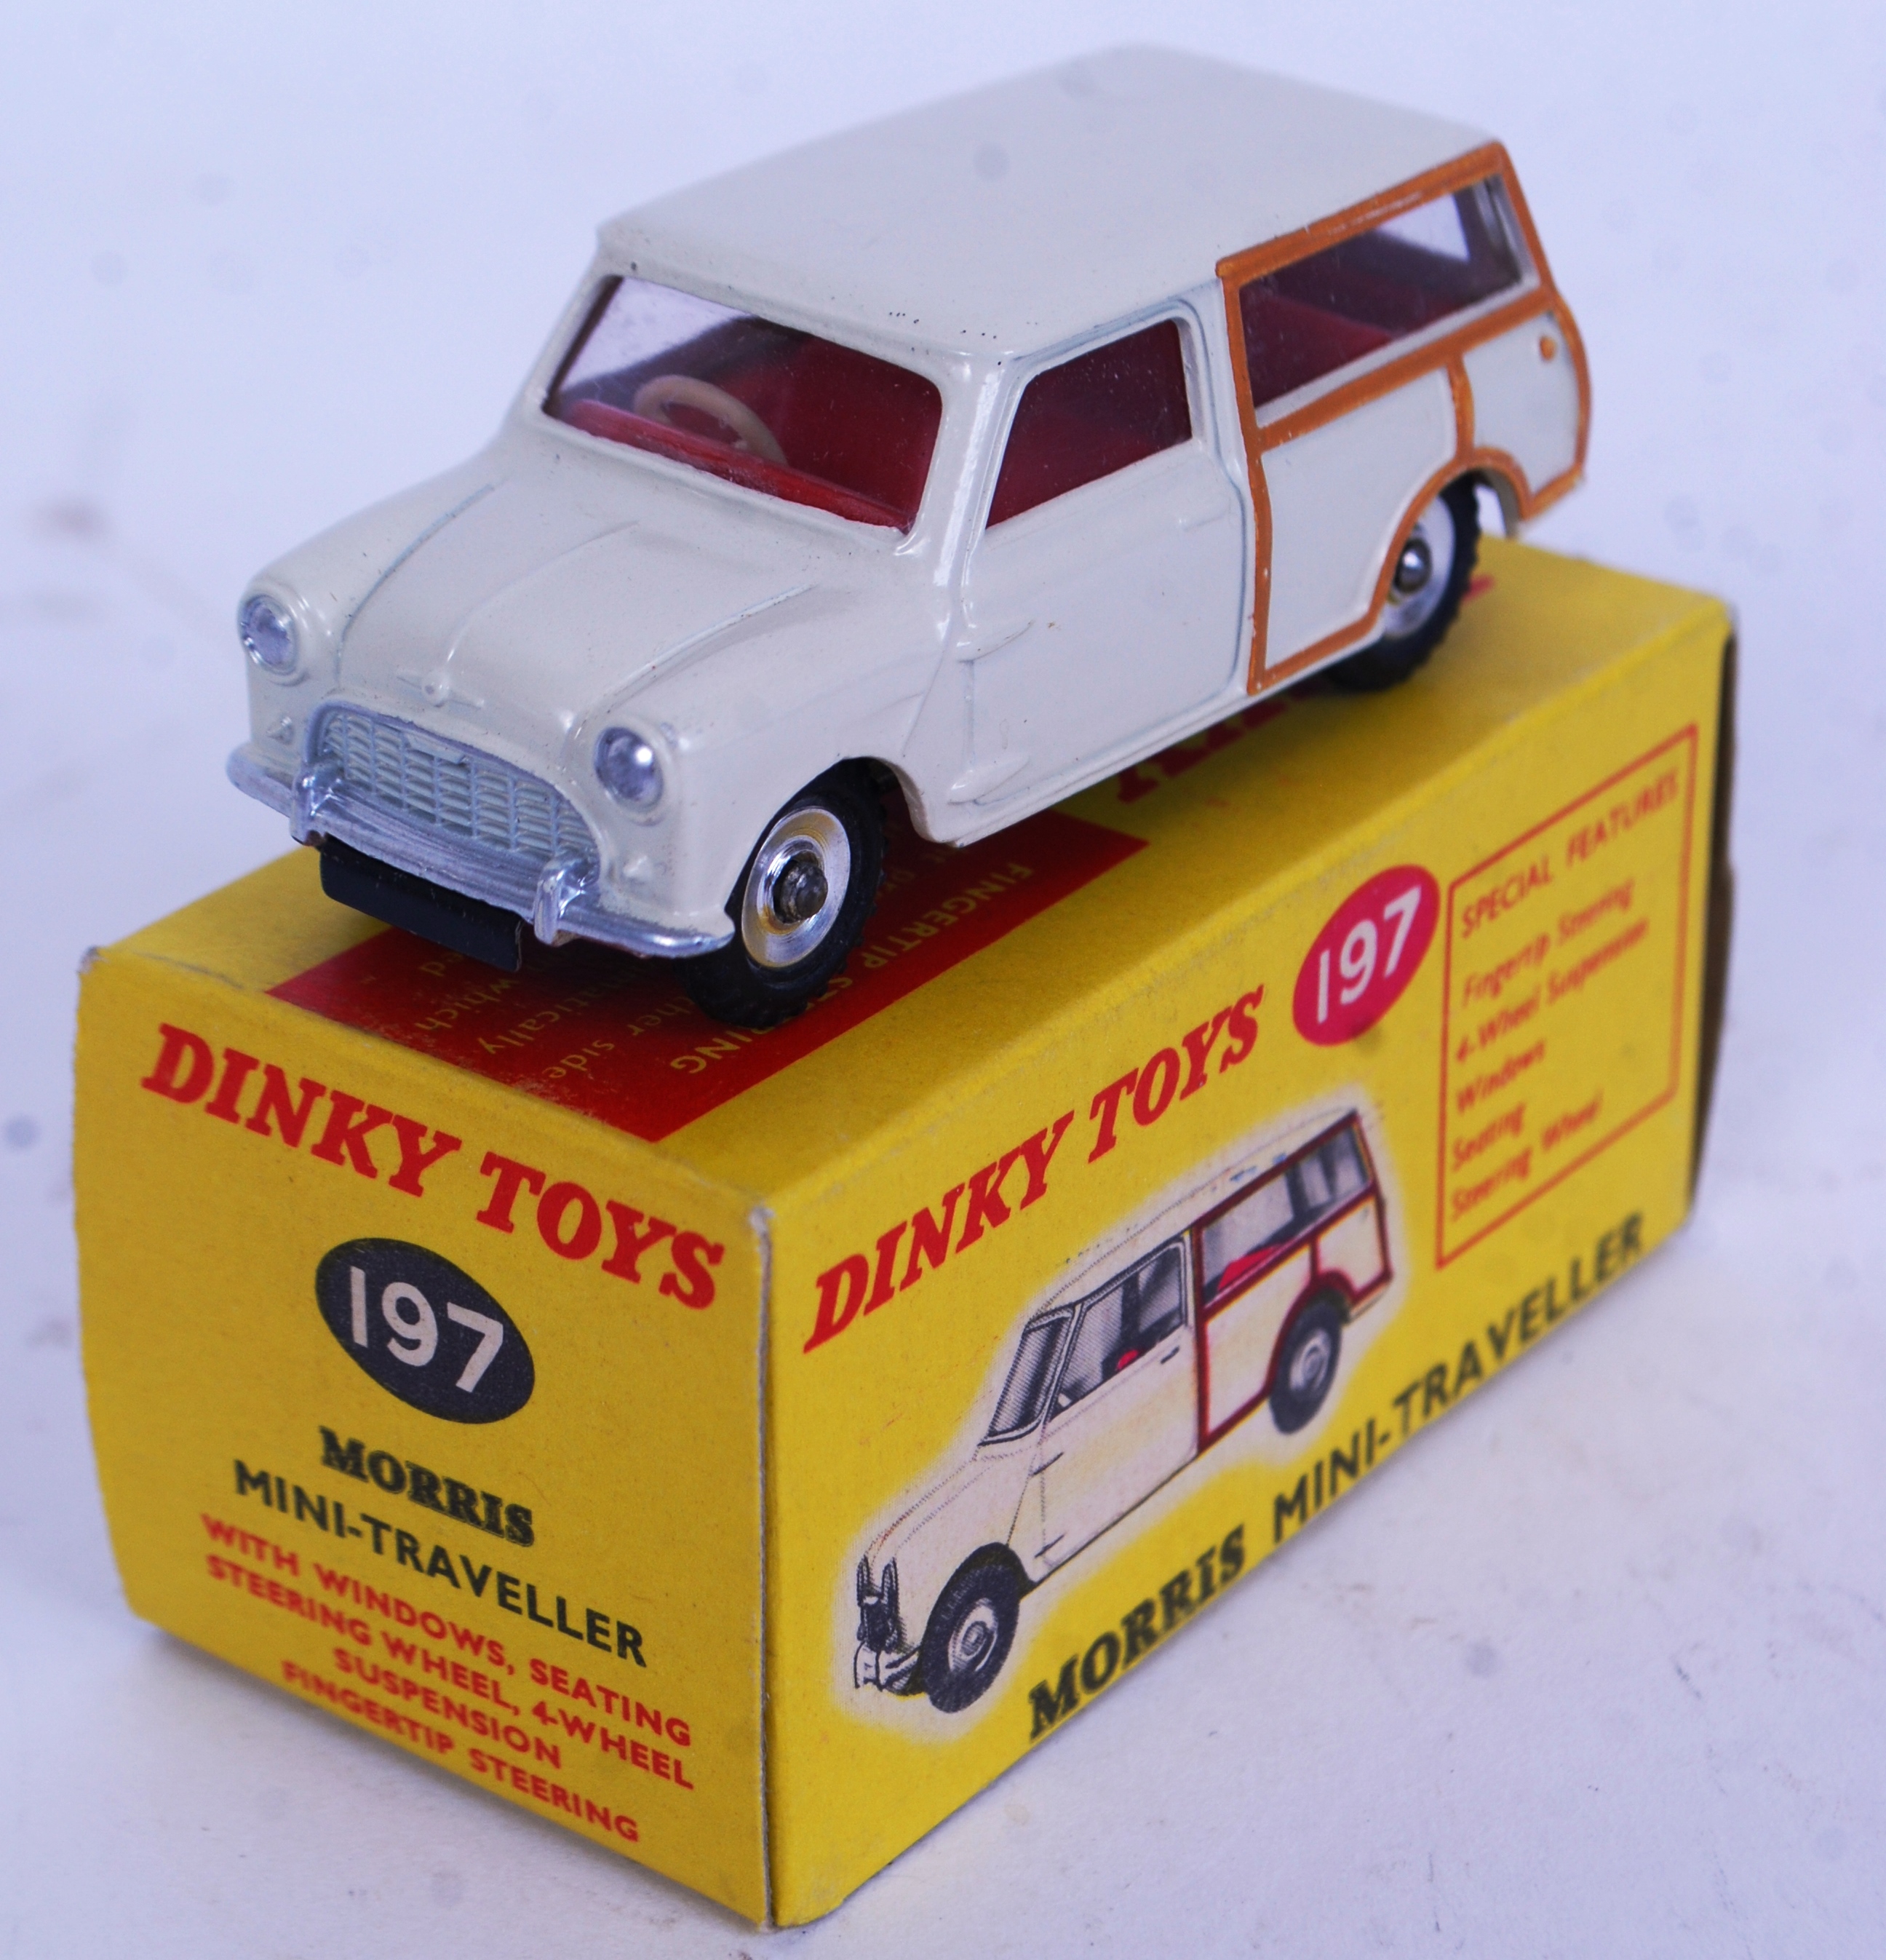 DINKY: An original vintage Dinky diecast model 197 Morris Mini Traveller car. - Image 3 of 4